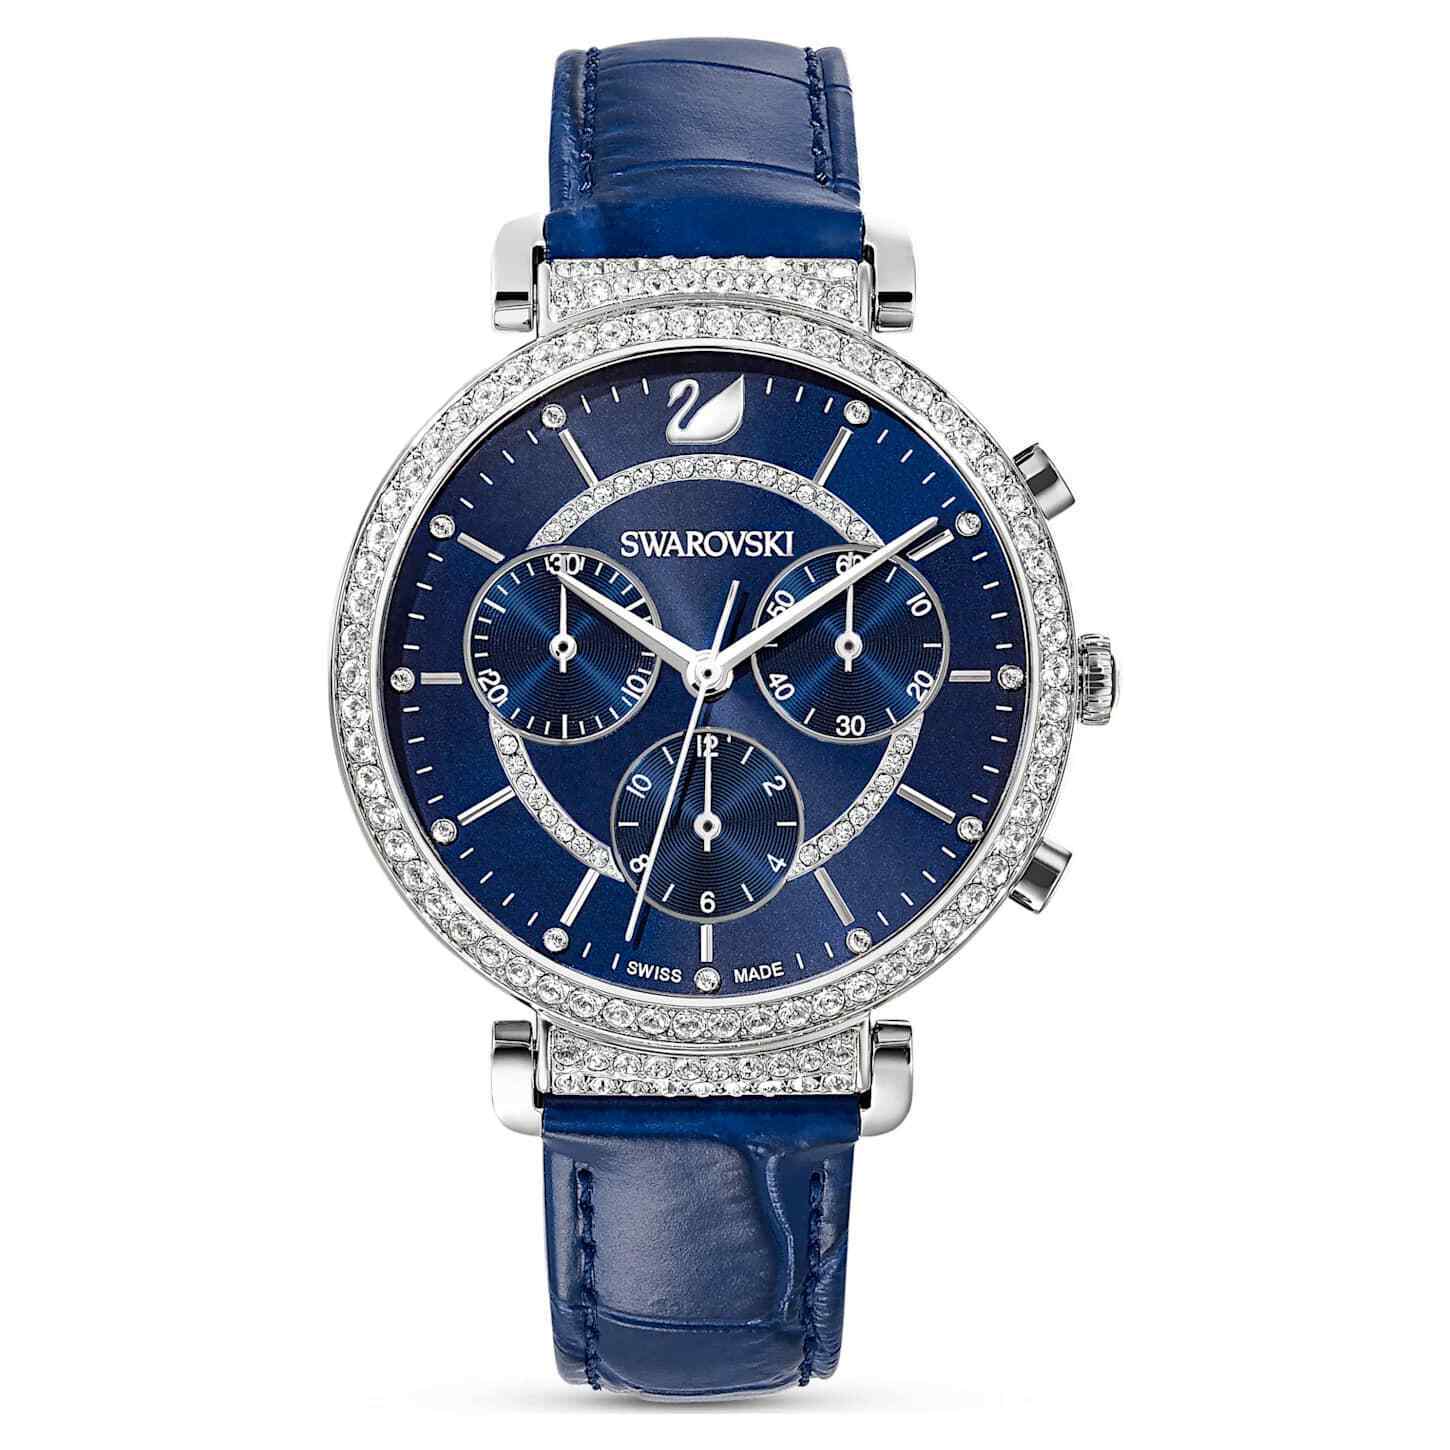 Swarovski Crystal Passage Chrono Watch, Leather Strap, Blue Dial, 5580342